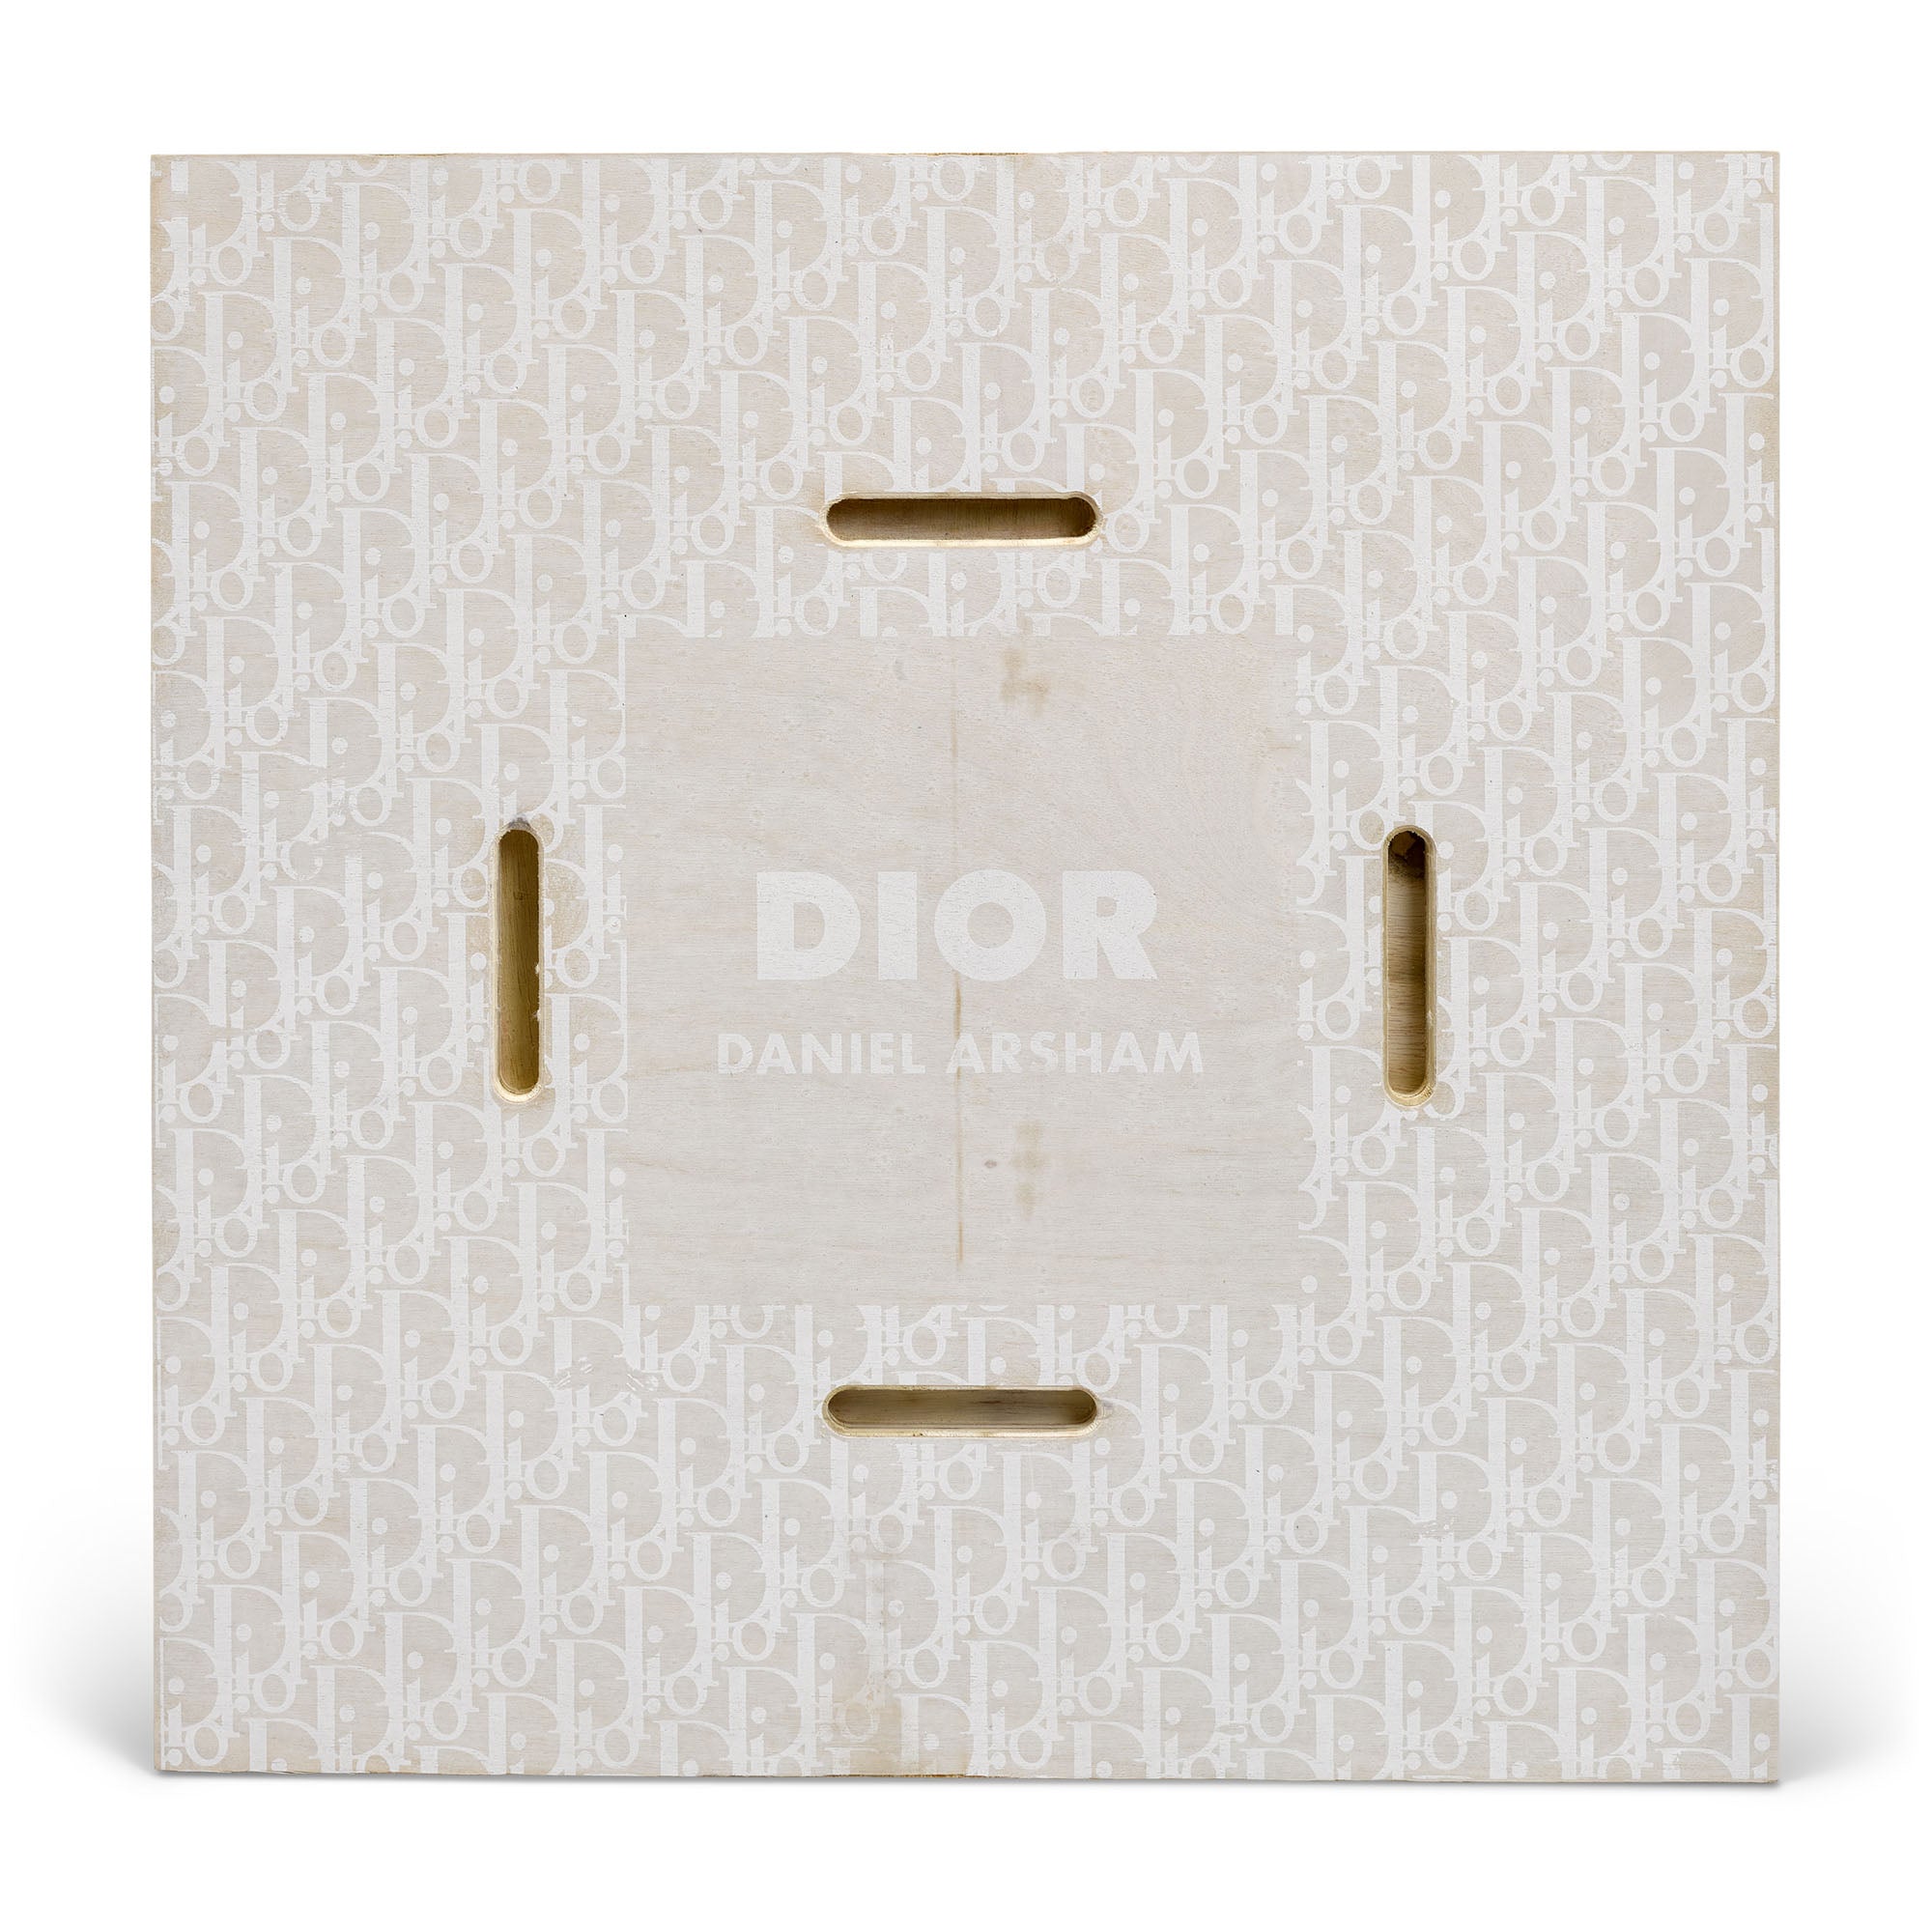 Lot - ¤ Daniel Arsham x Christian Dior Future Relic Eroded Basketball Dior  - 2020 Sculpture en hydrostone et cristaux de quartz - Catalog# 735869  Urban Collectible Online